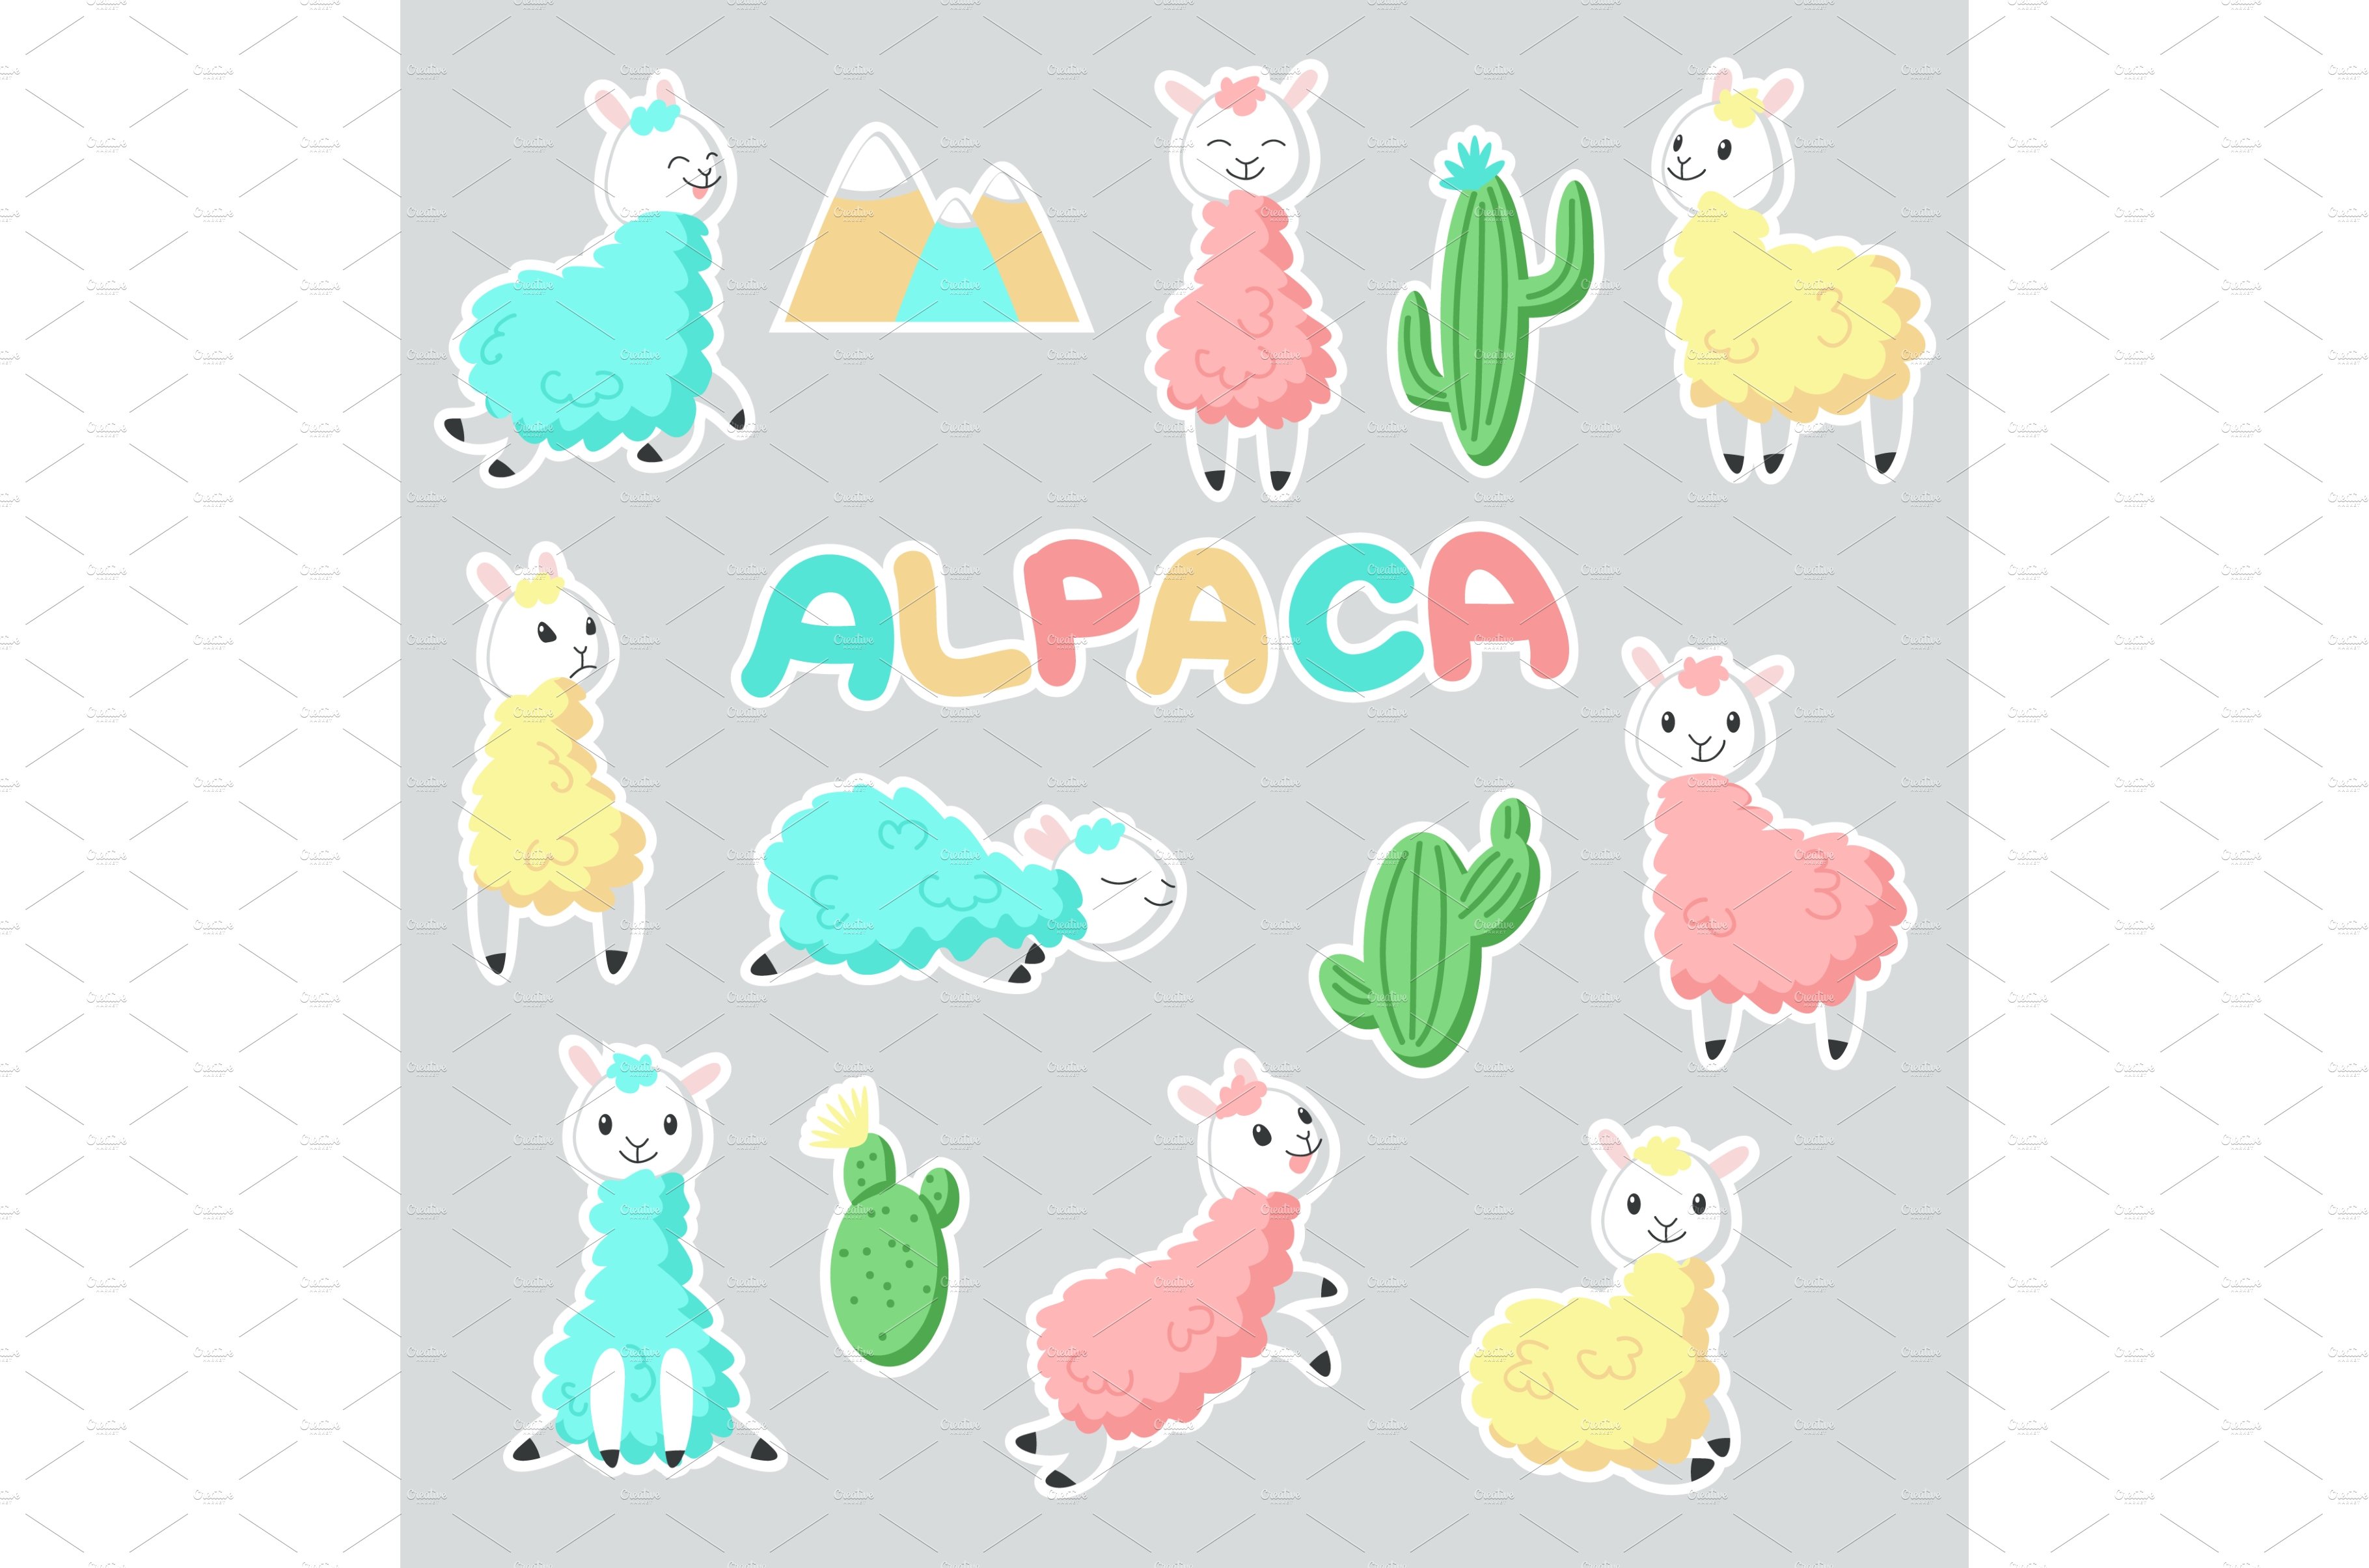 Alpaca stickers vector hand drawn cover image.